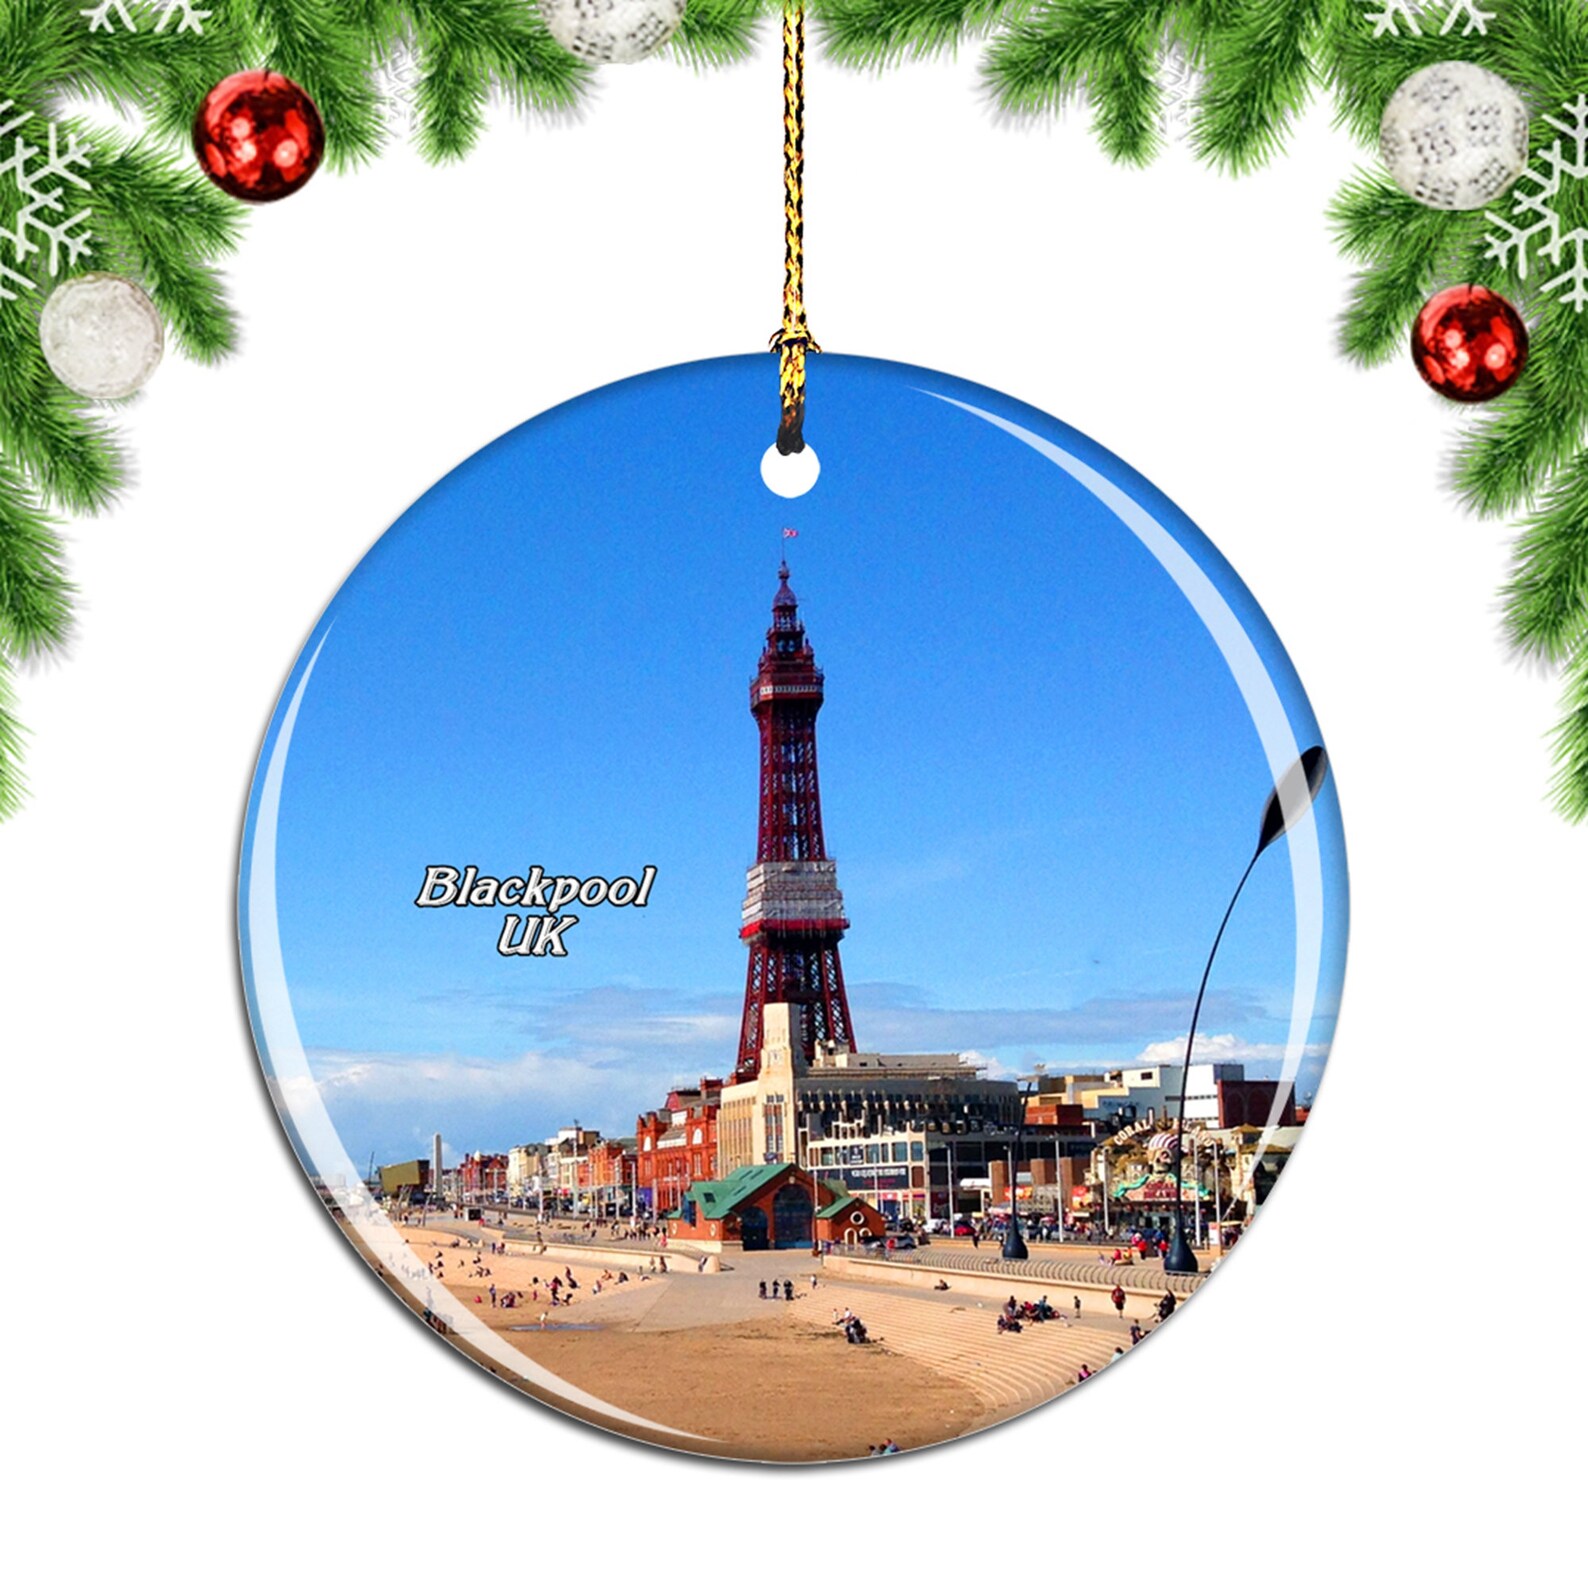 Blackpool Tower UK Christmas Ornament Souvenir Gift Porcelain - Etsy